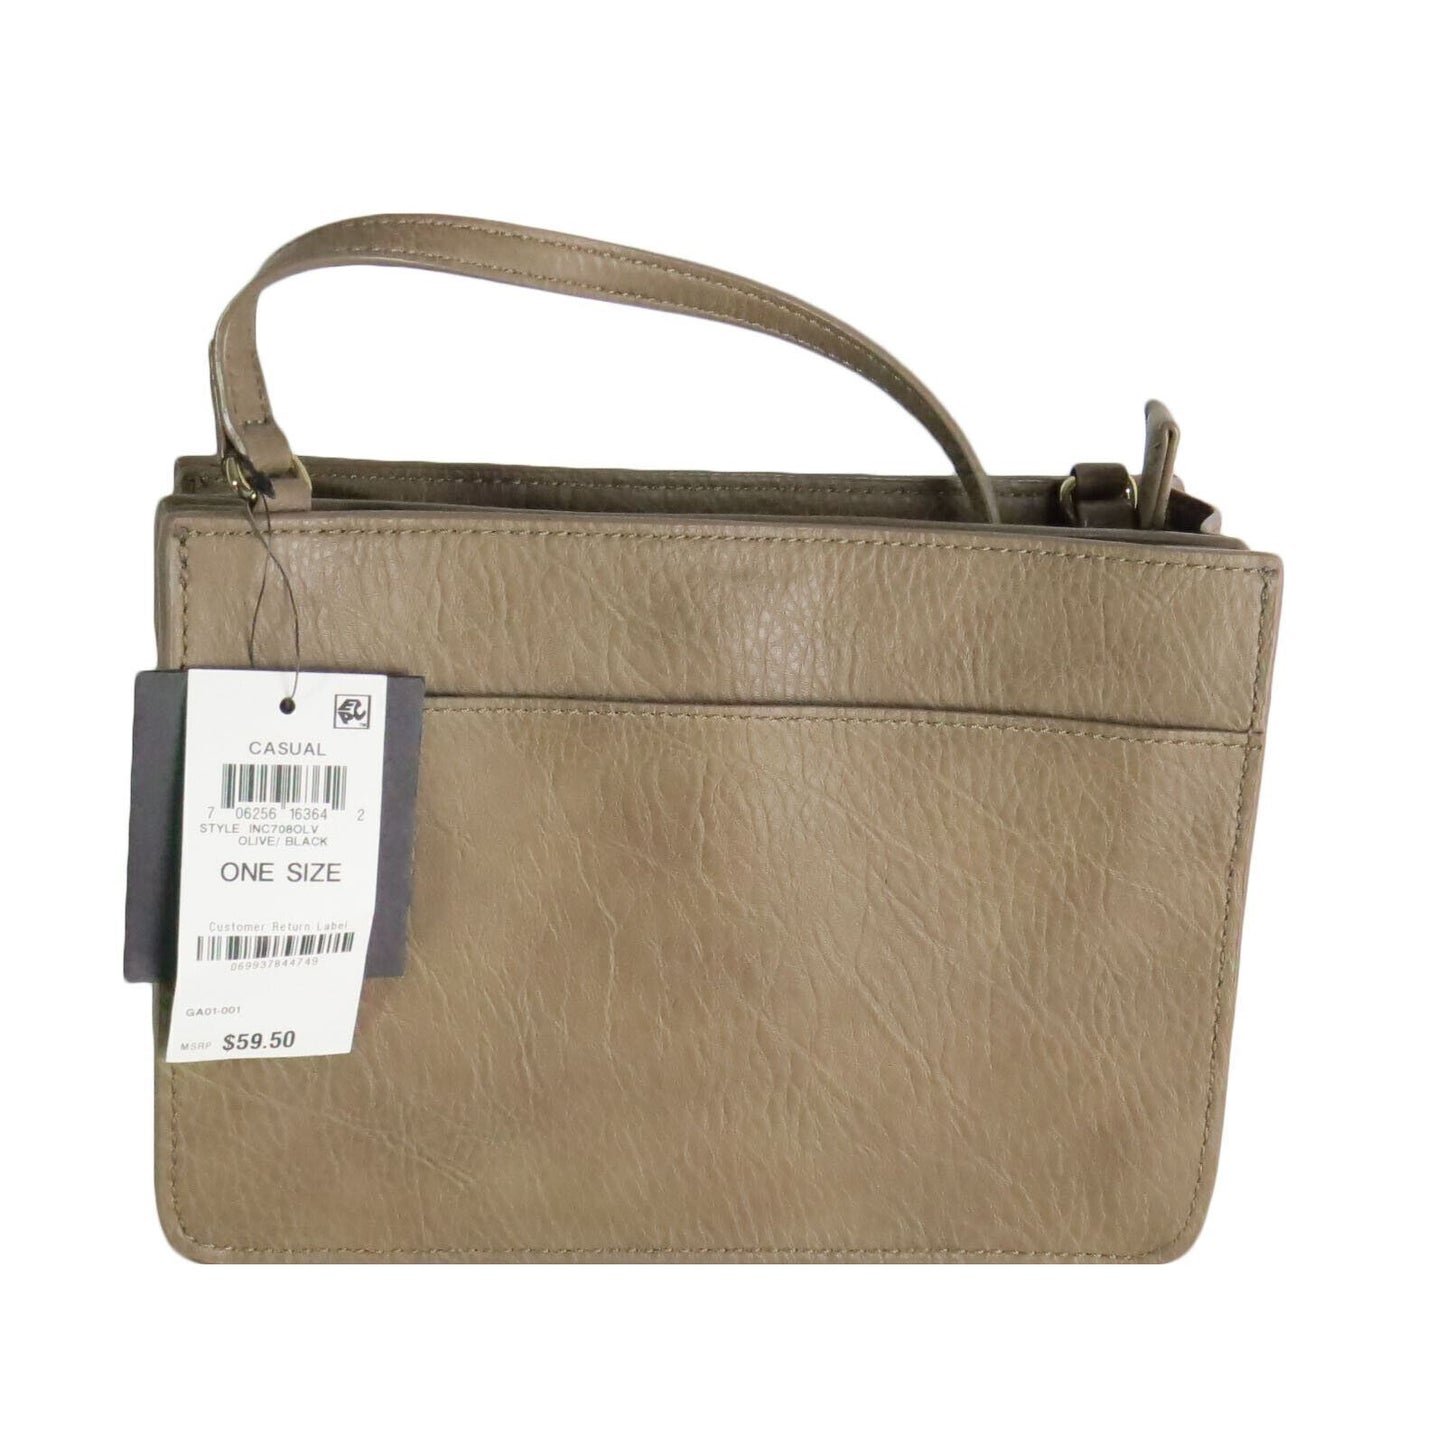 Women's Handbags INC International Concept Women's Kayla Crossboy Handbag Olive